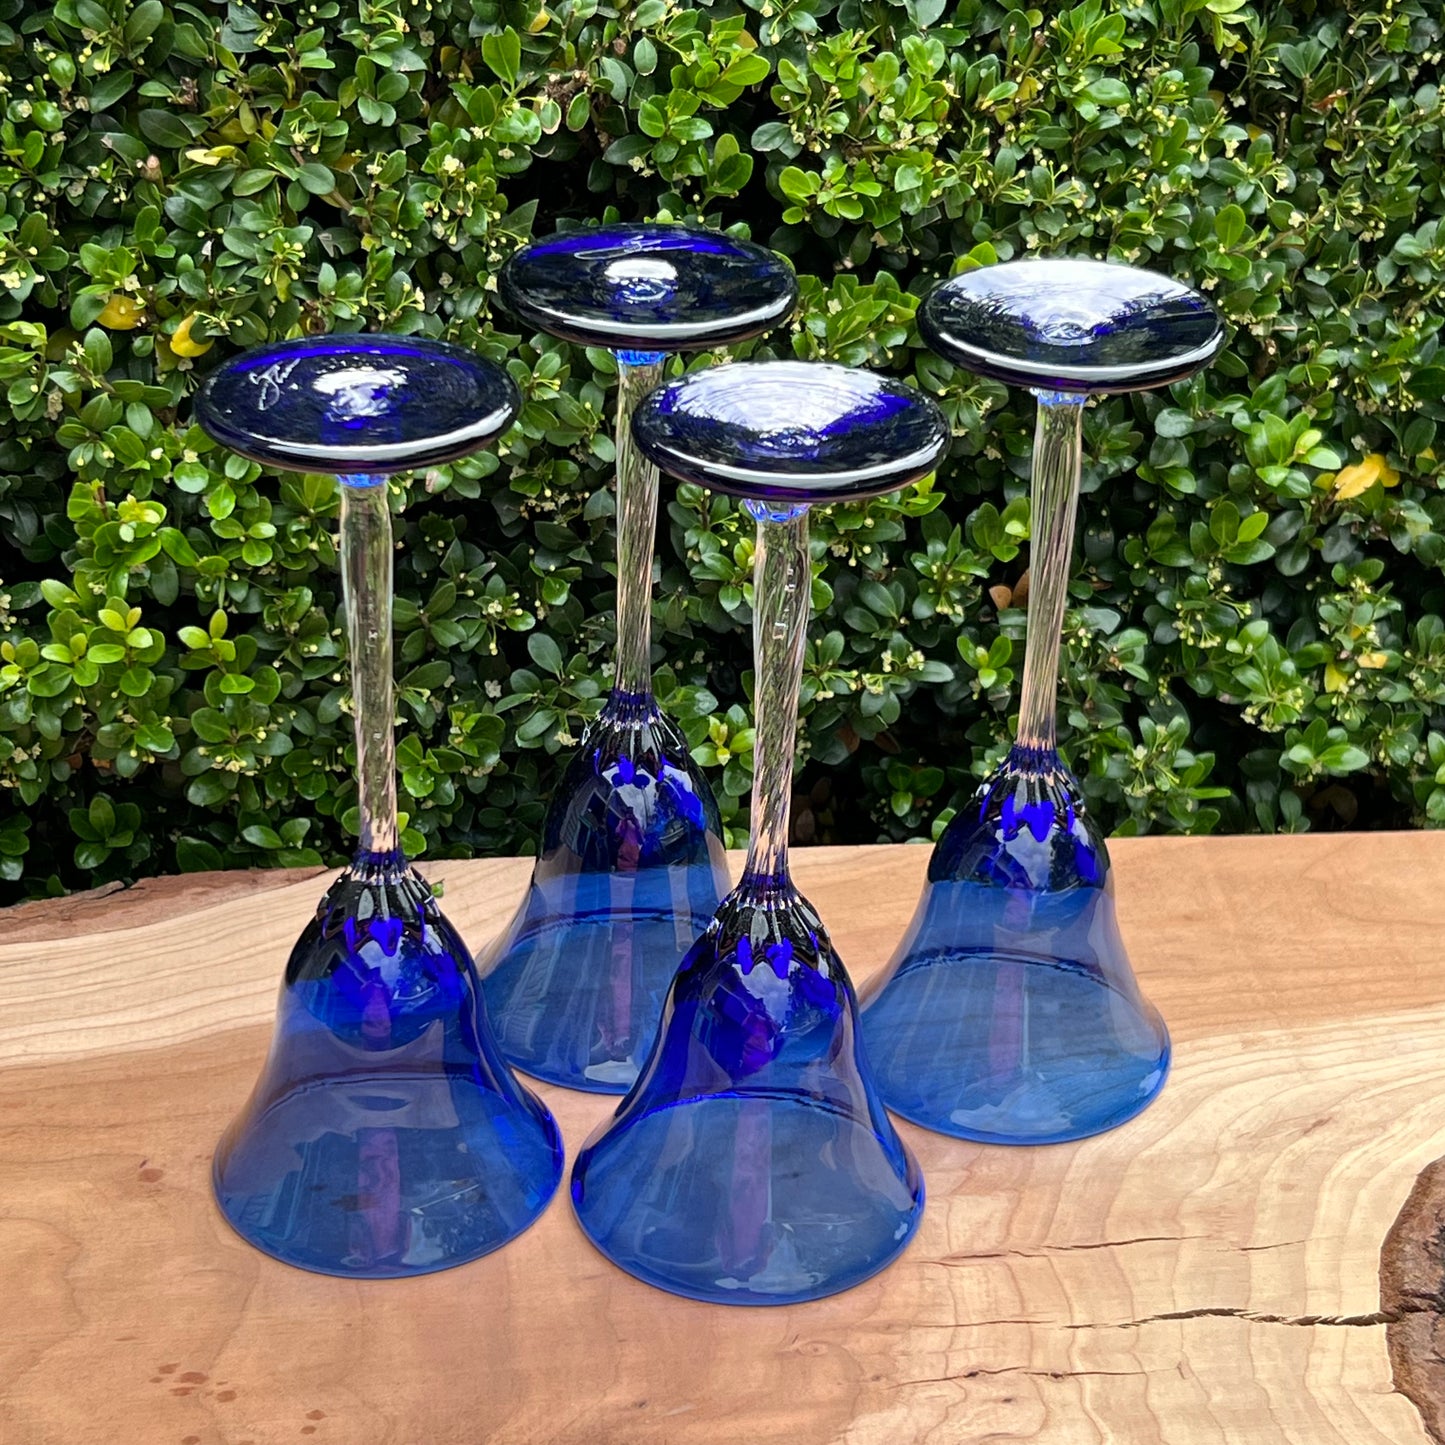 Four Rick Strini Cobalt Blue & Clear Handblown Art Glass Wine Glasses